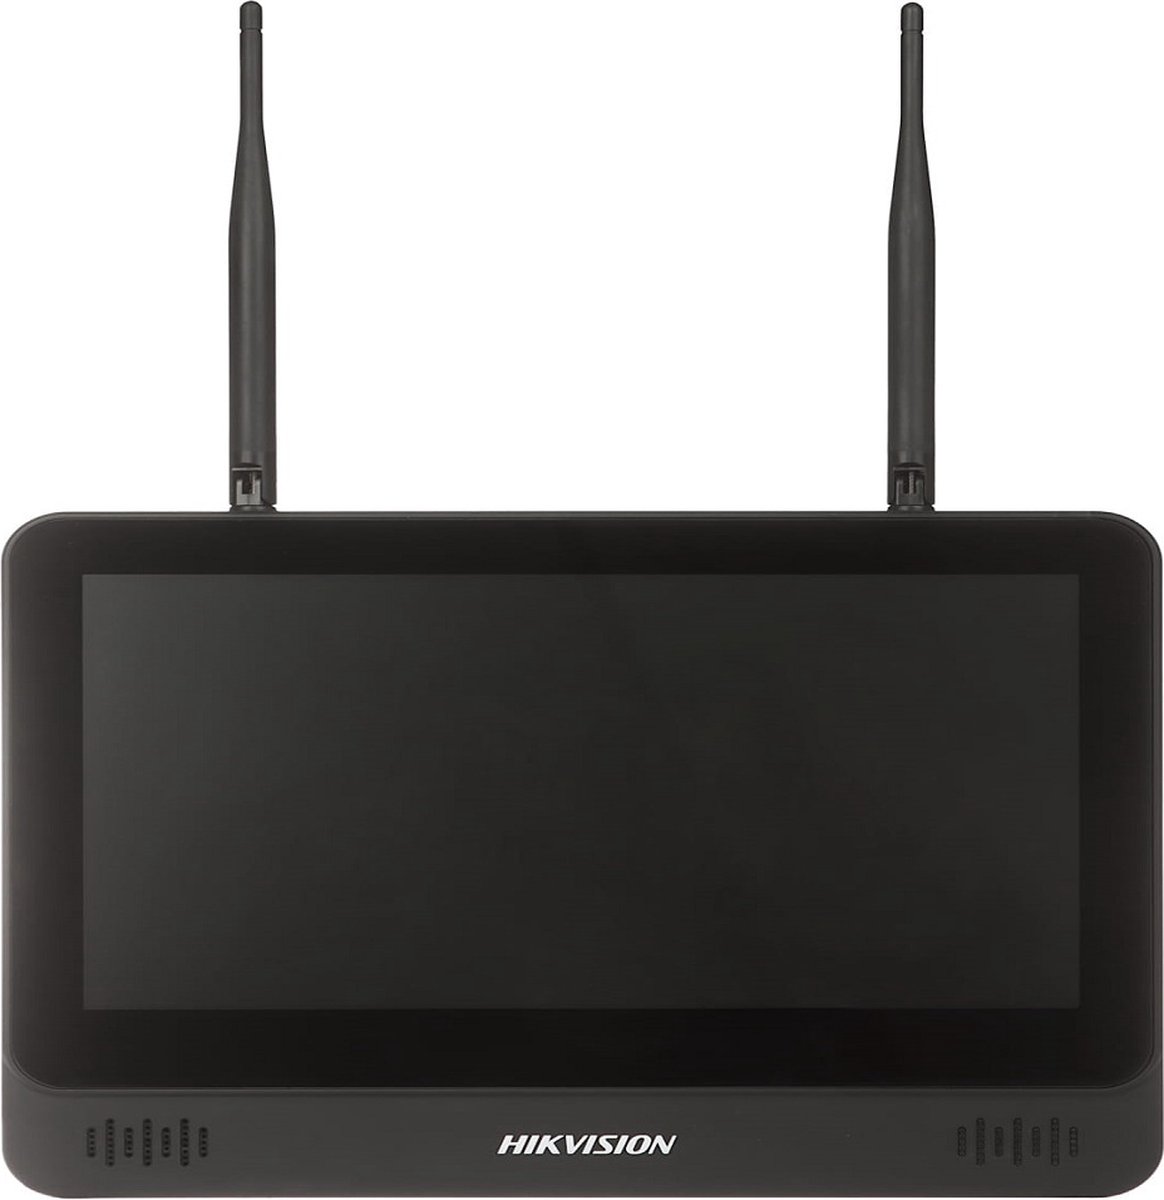 Hikvision DS-7608NI-L1/W WiFi 8 kanaals DVR met monitor